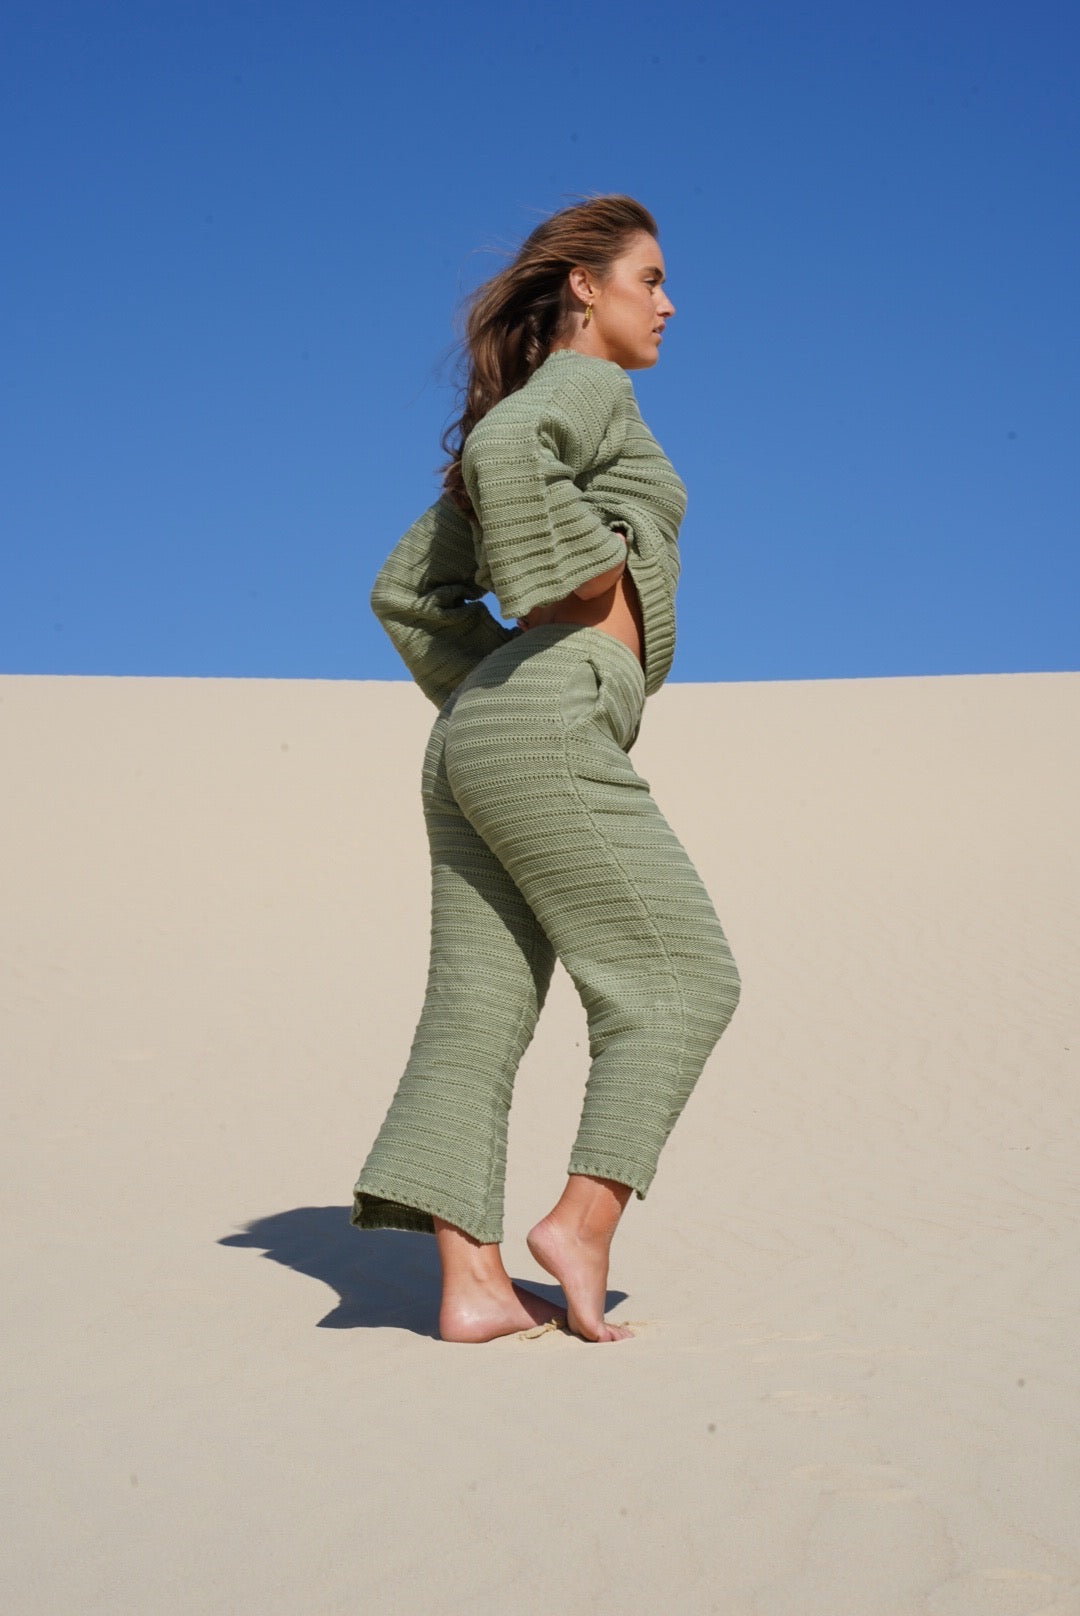 Willow Knit set green - Designer knitwear set - Slow fashion - 100% natural cotton